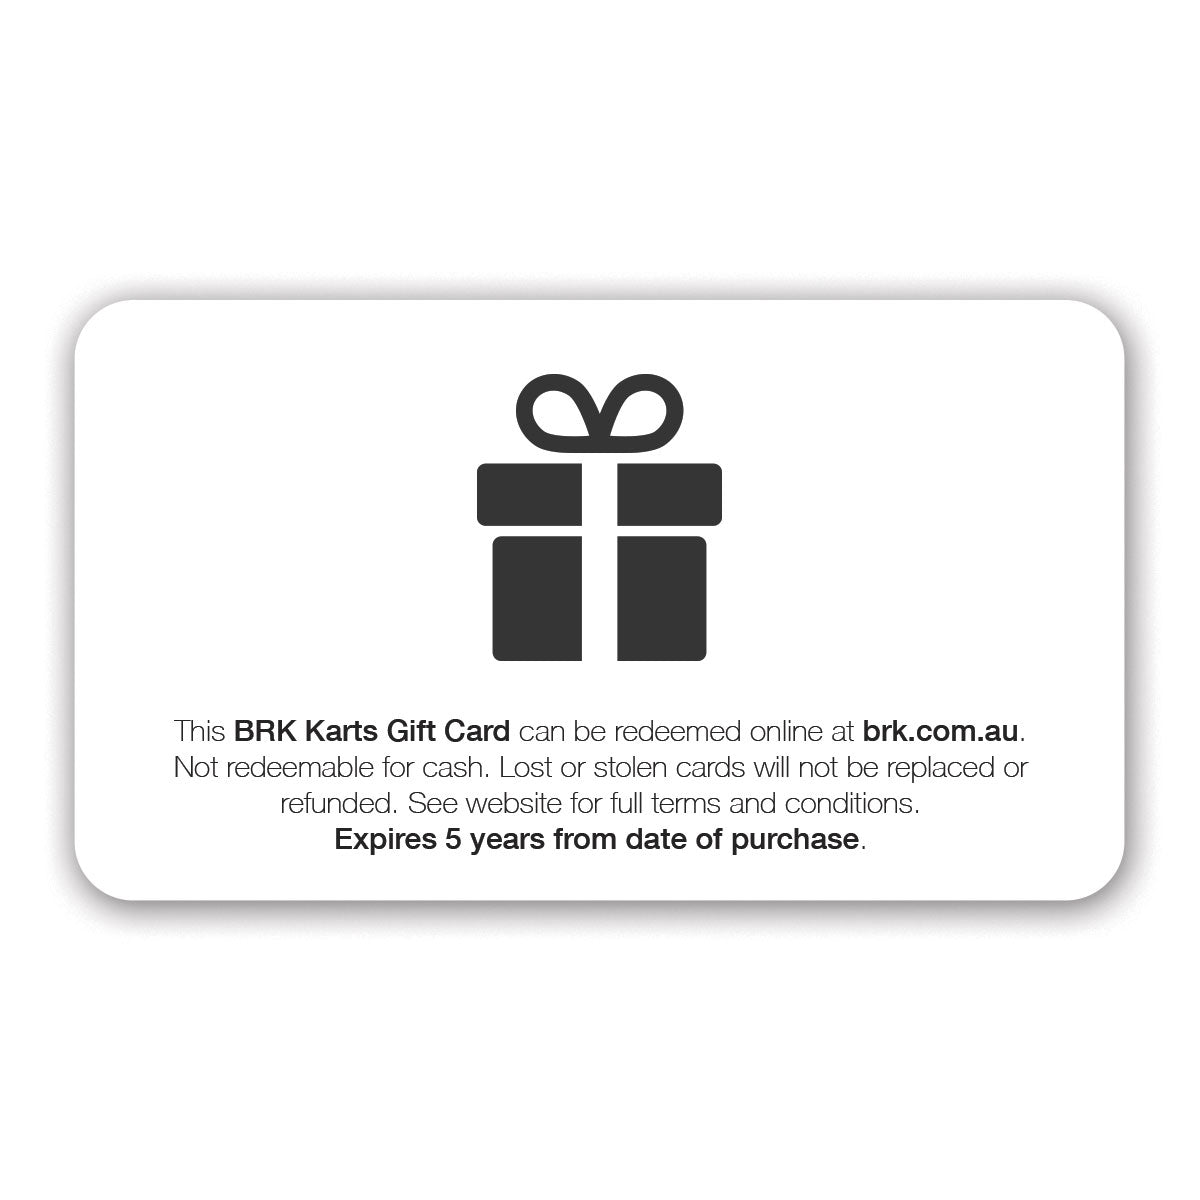 BRK Karts Gift Card - $50